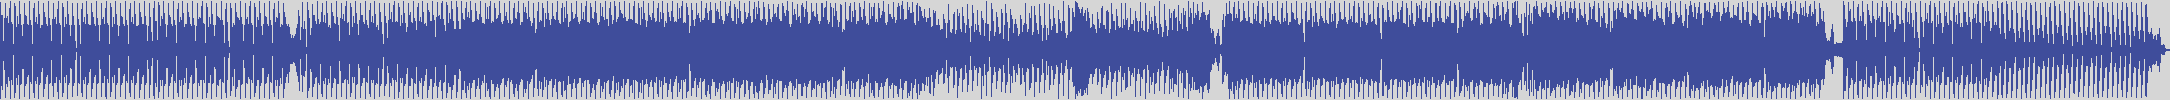 nf_boyz_records [NFY005] Yoshimura - Superbios [Minimal House Edit] audio wave form